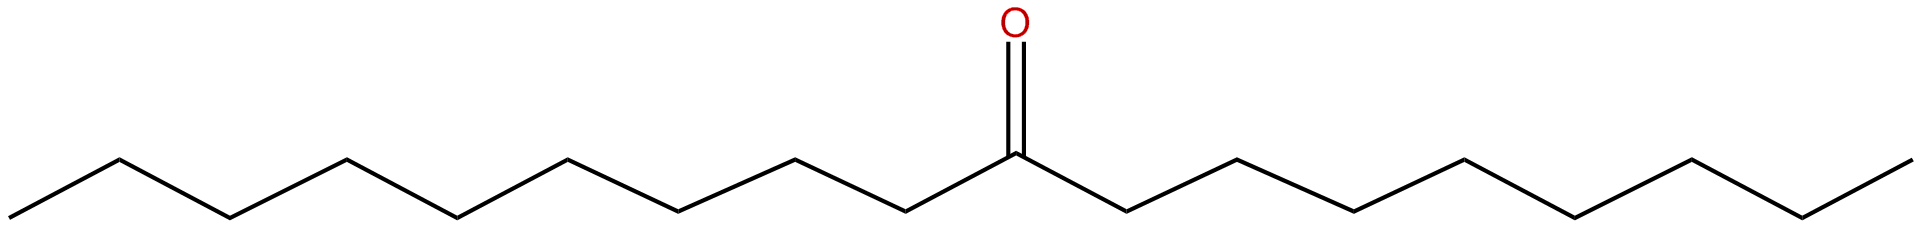 Image of 9-octadecanone